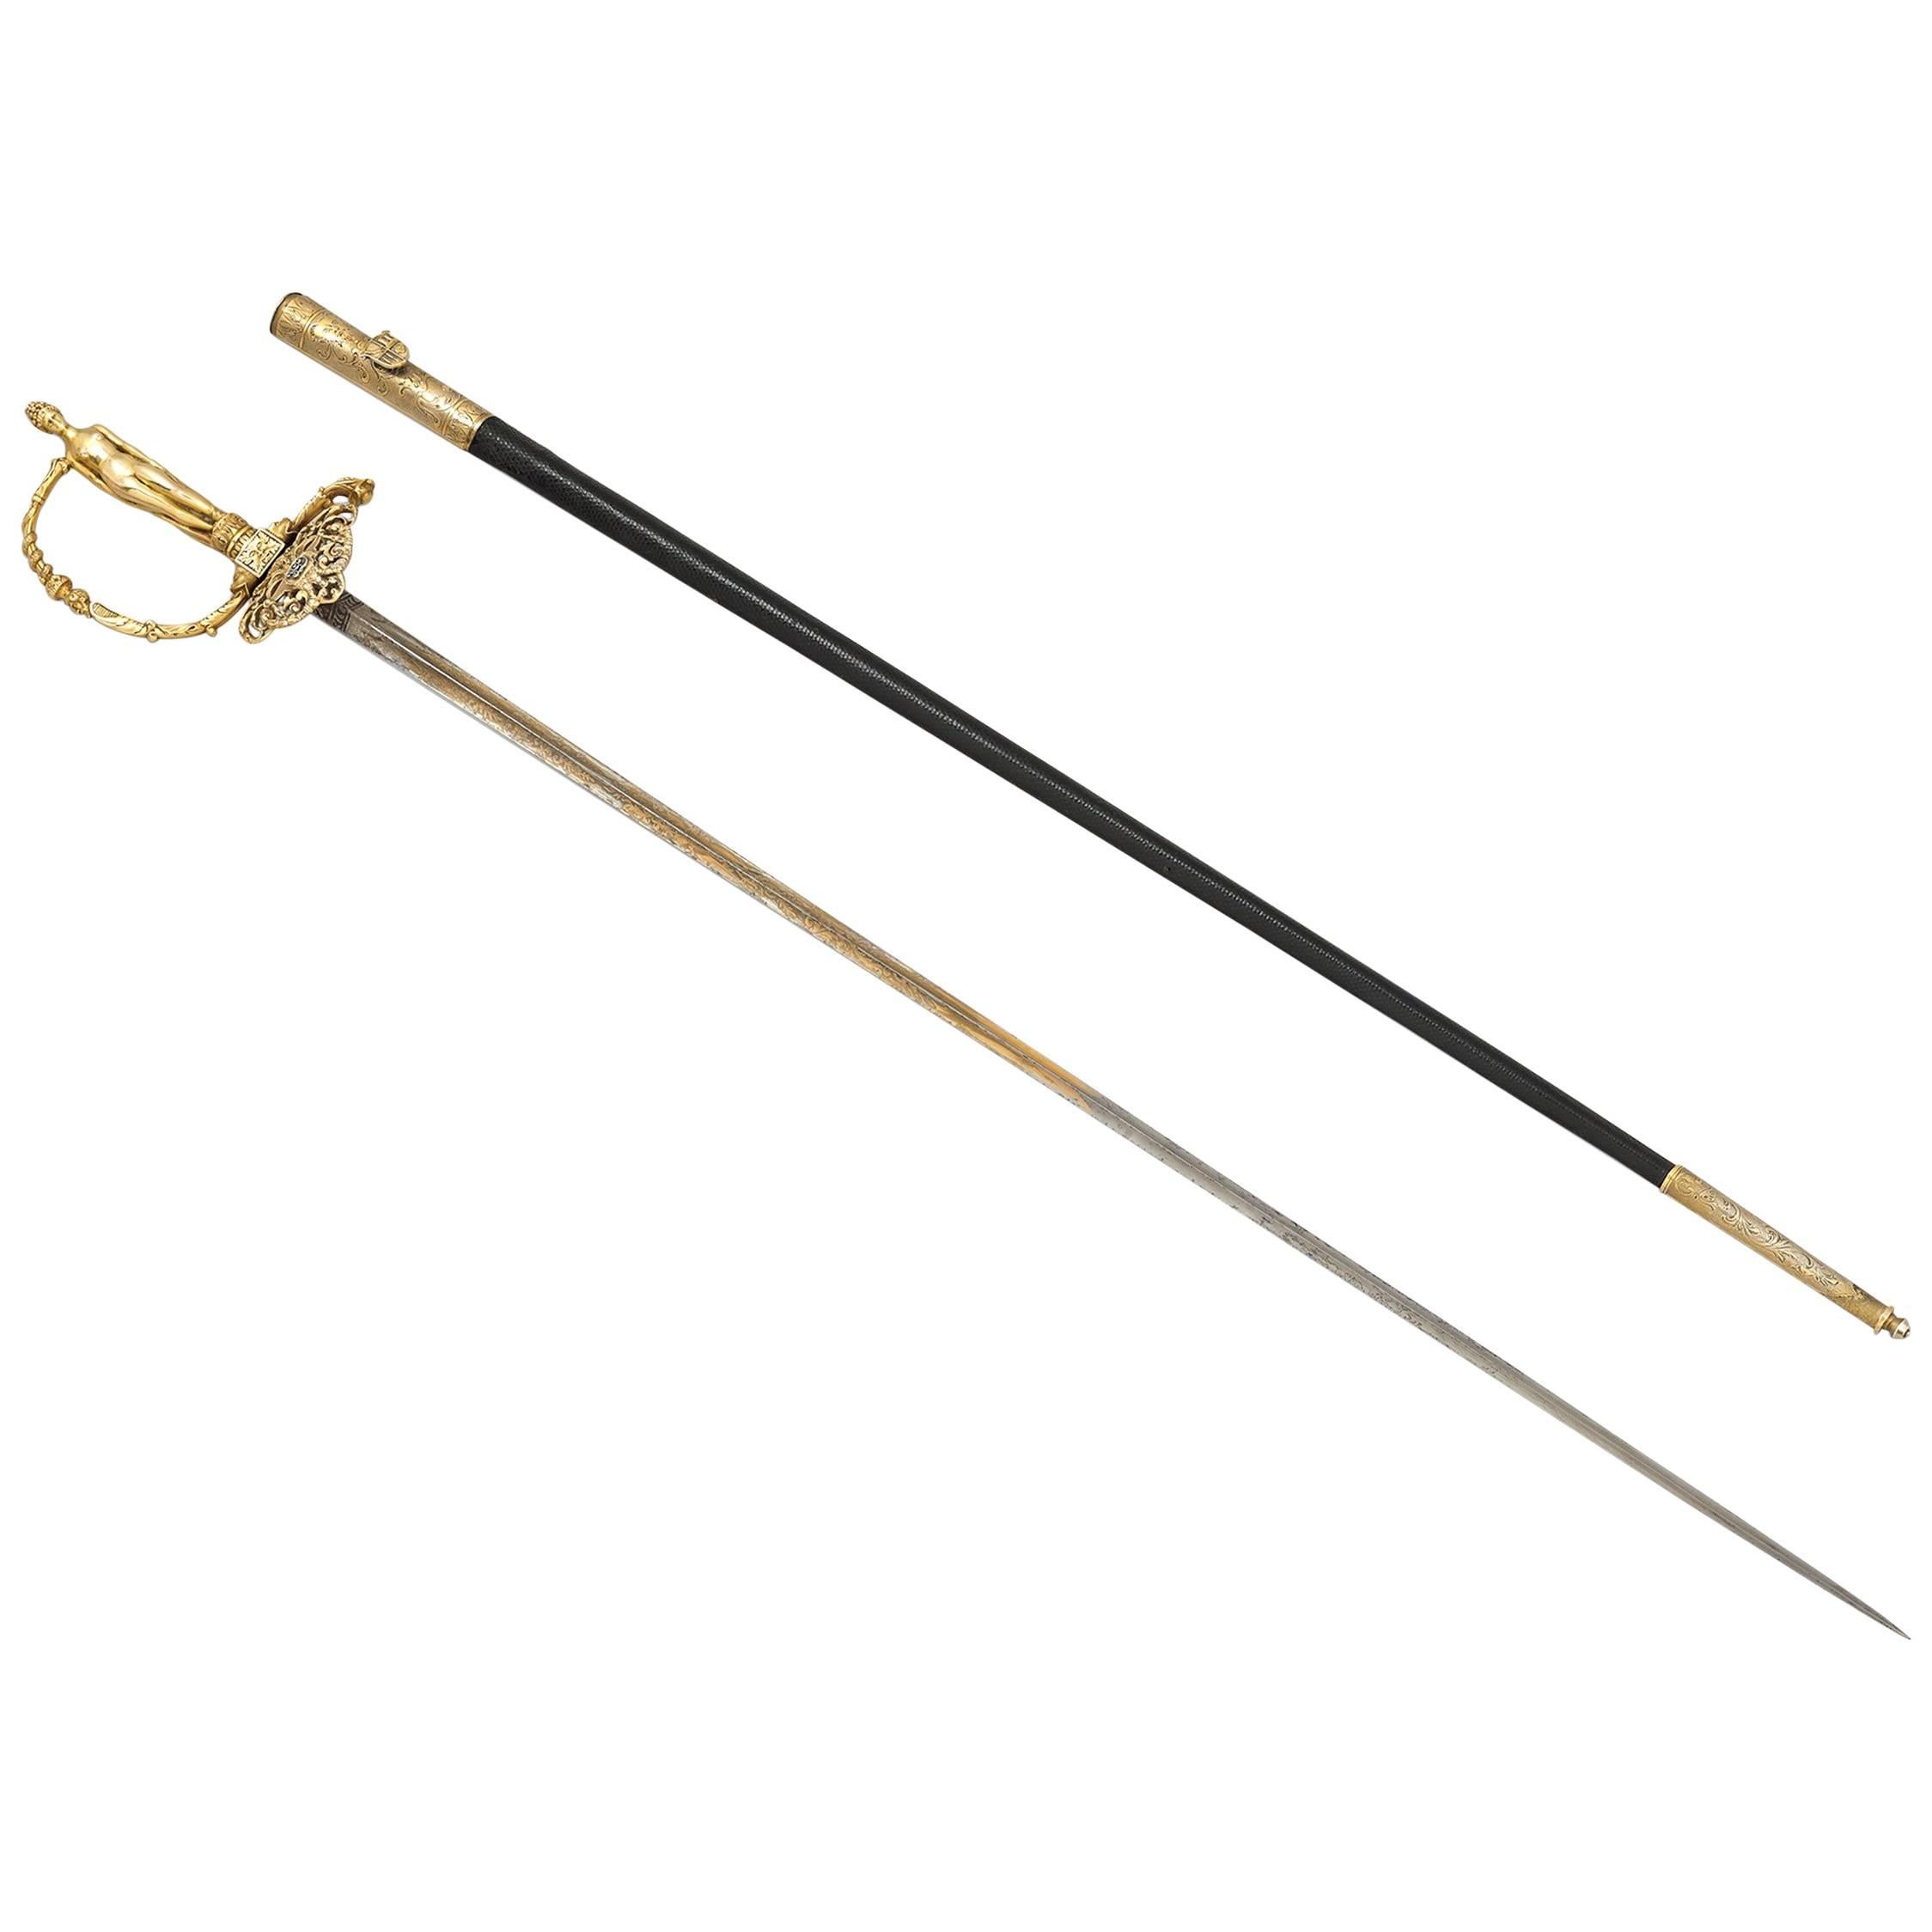 Jean-Gabriel Domergue's French Academician Sword